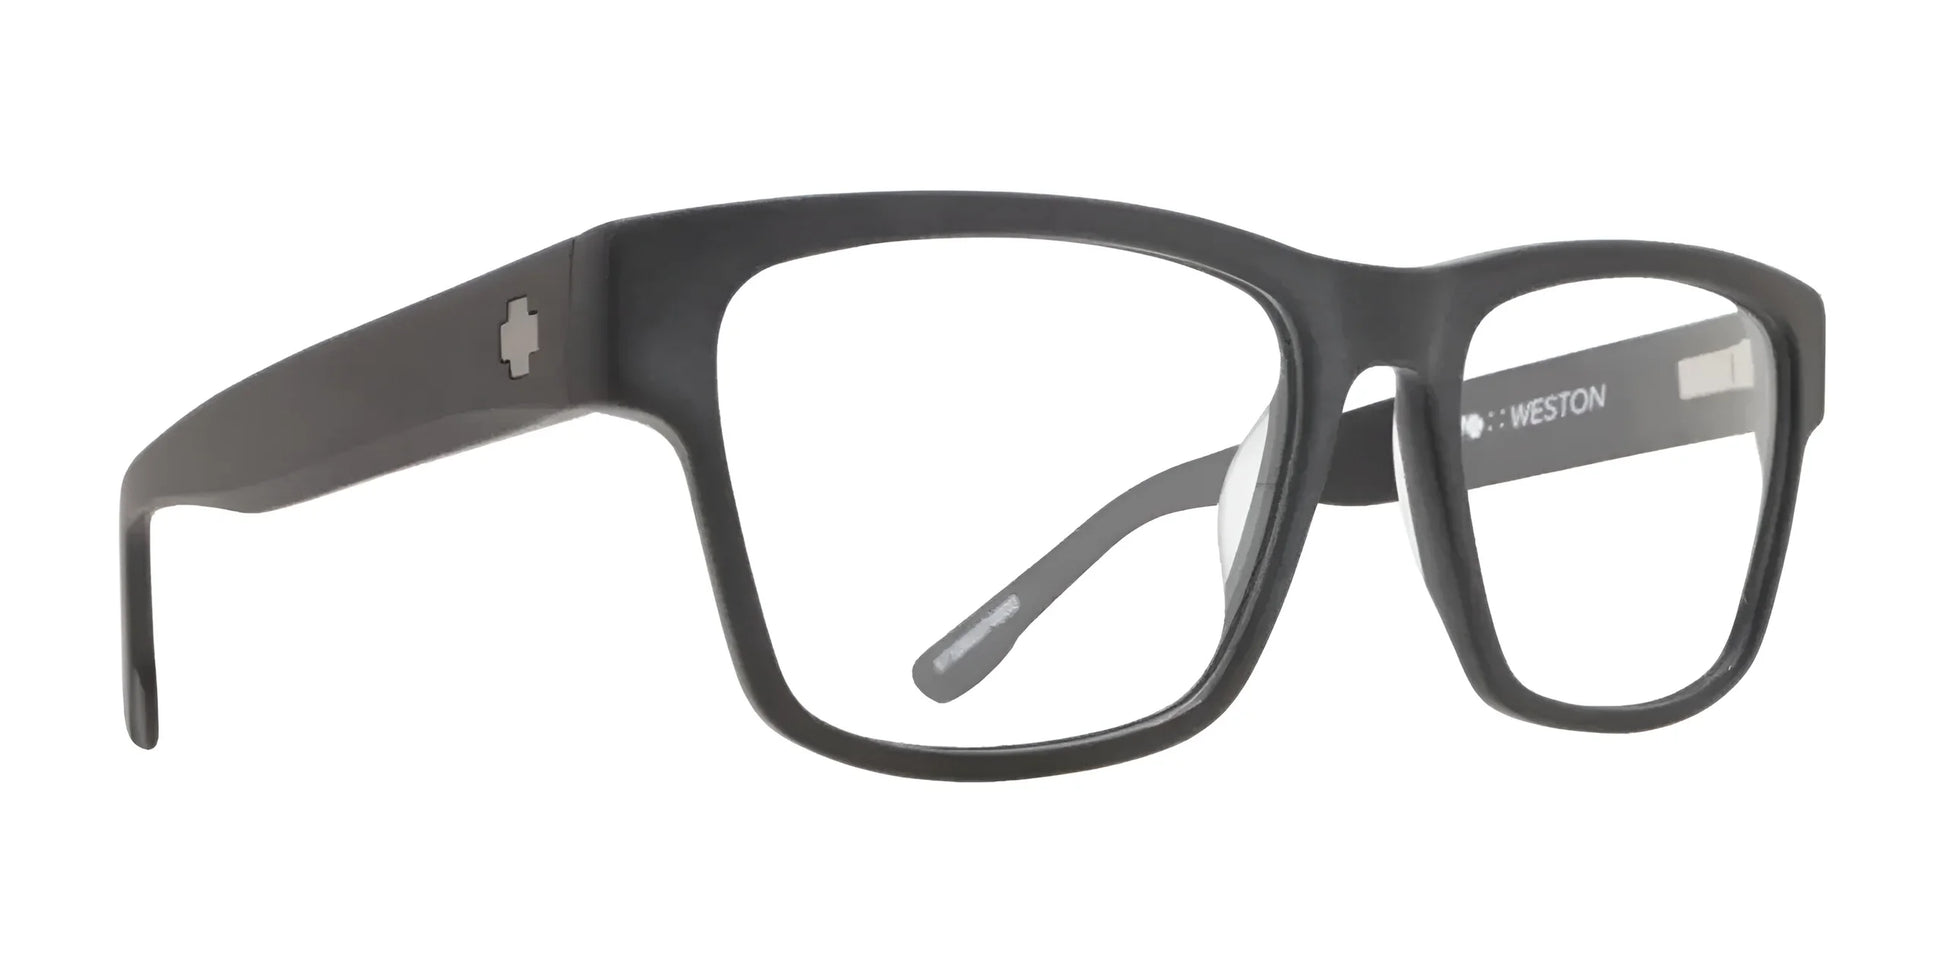 SPY WESTON Eyeglasses Black